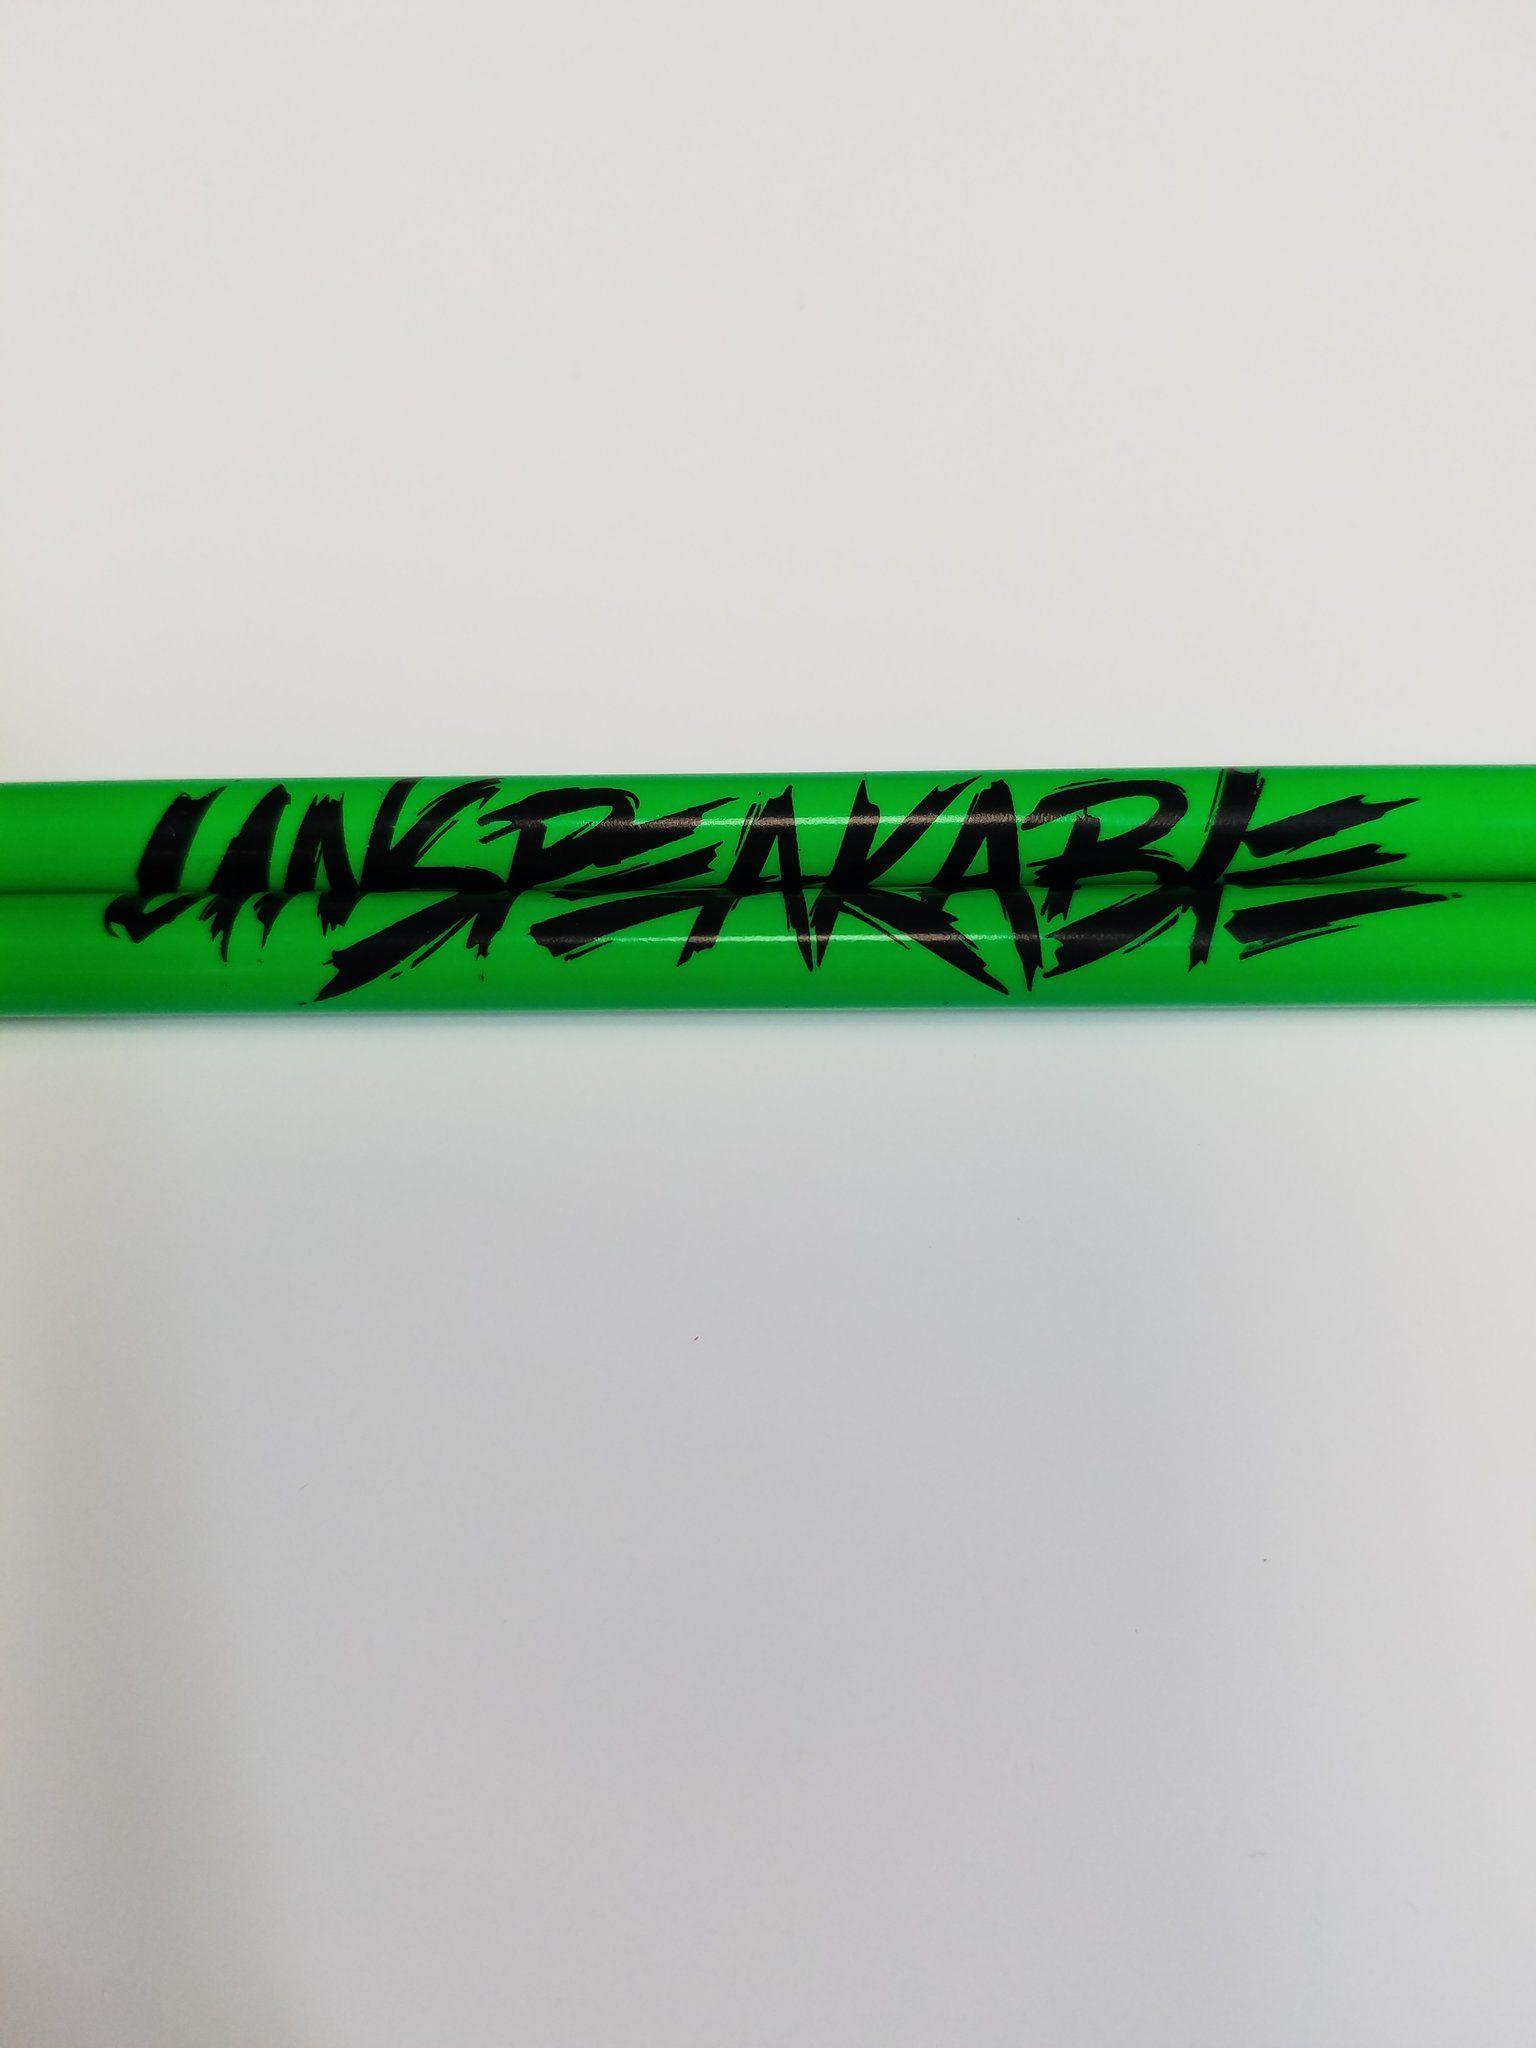 UnspeakableGaming Logo - UnspeakableGaming Merch Logo Pencils